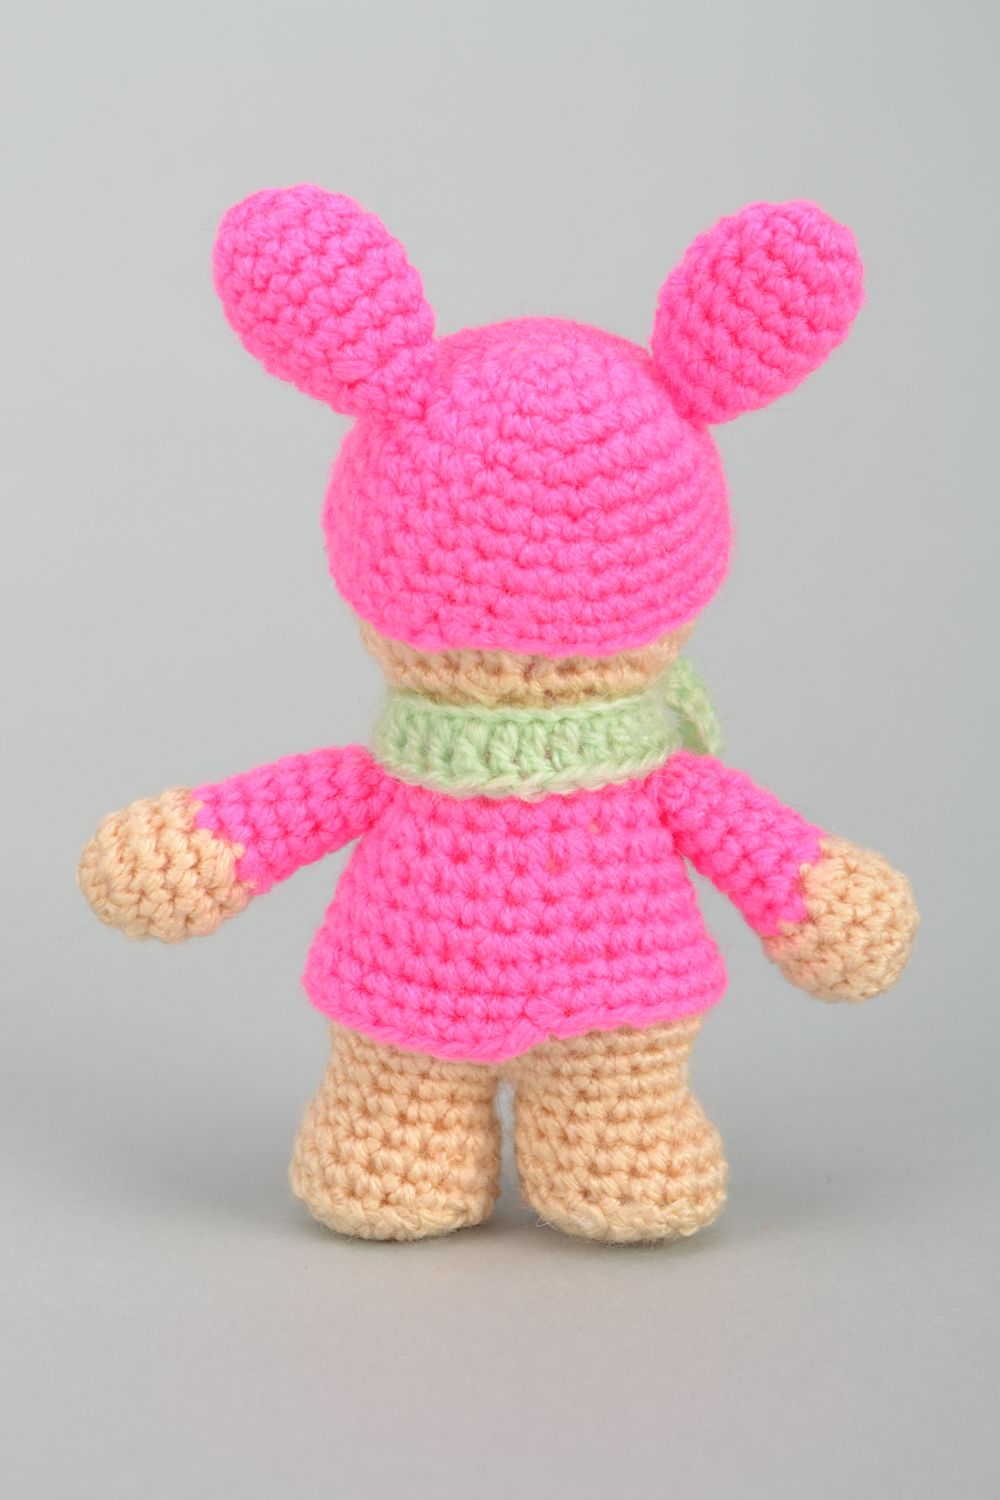 Soft crochet woolen toy doll photo 4